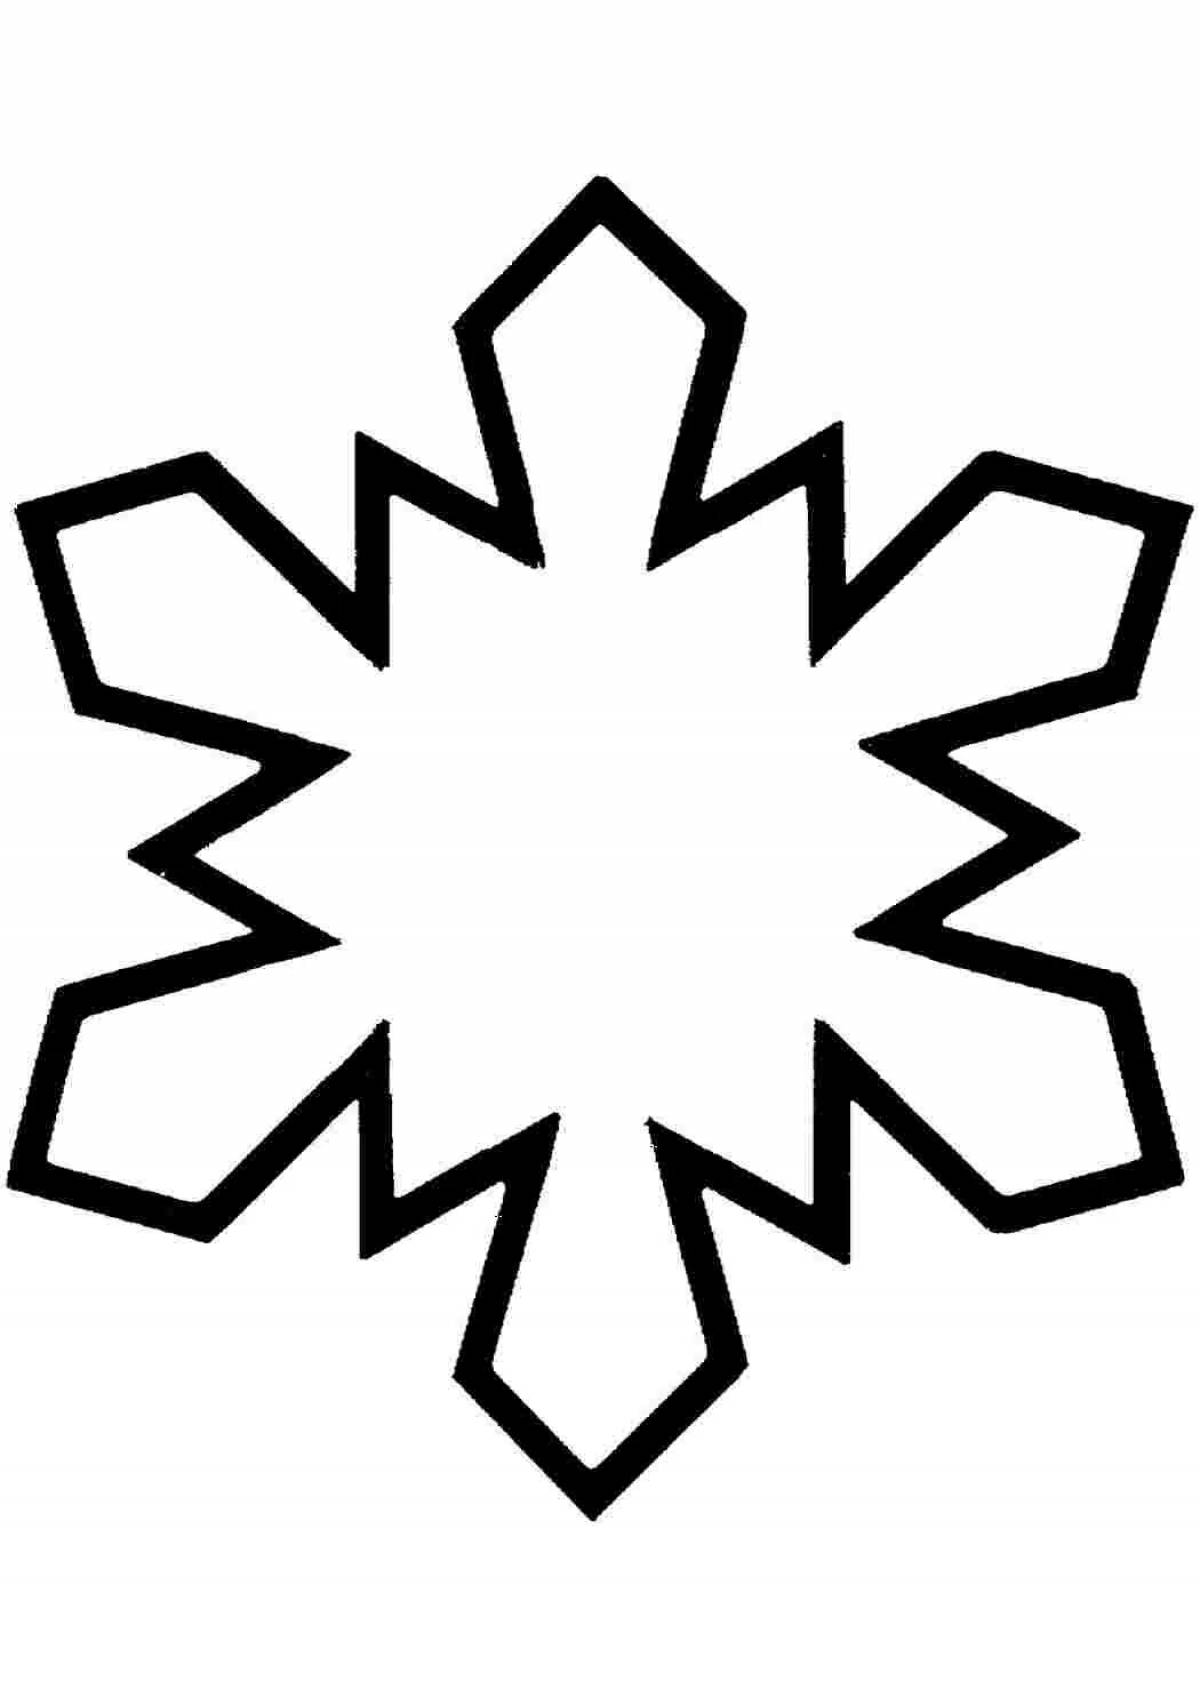 Snowflake pattern #4